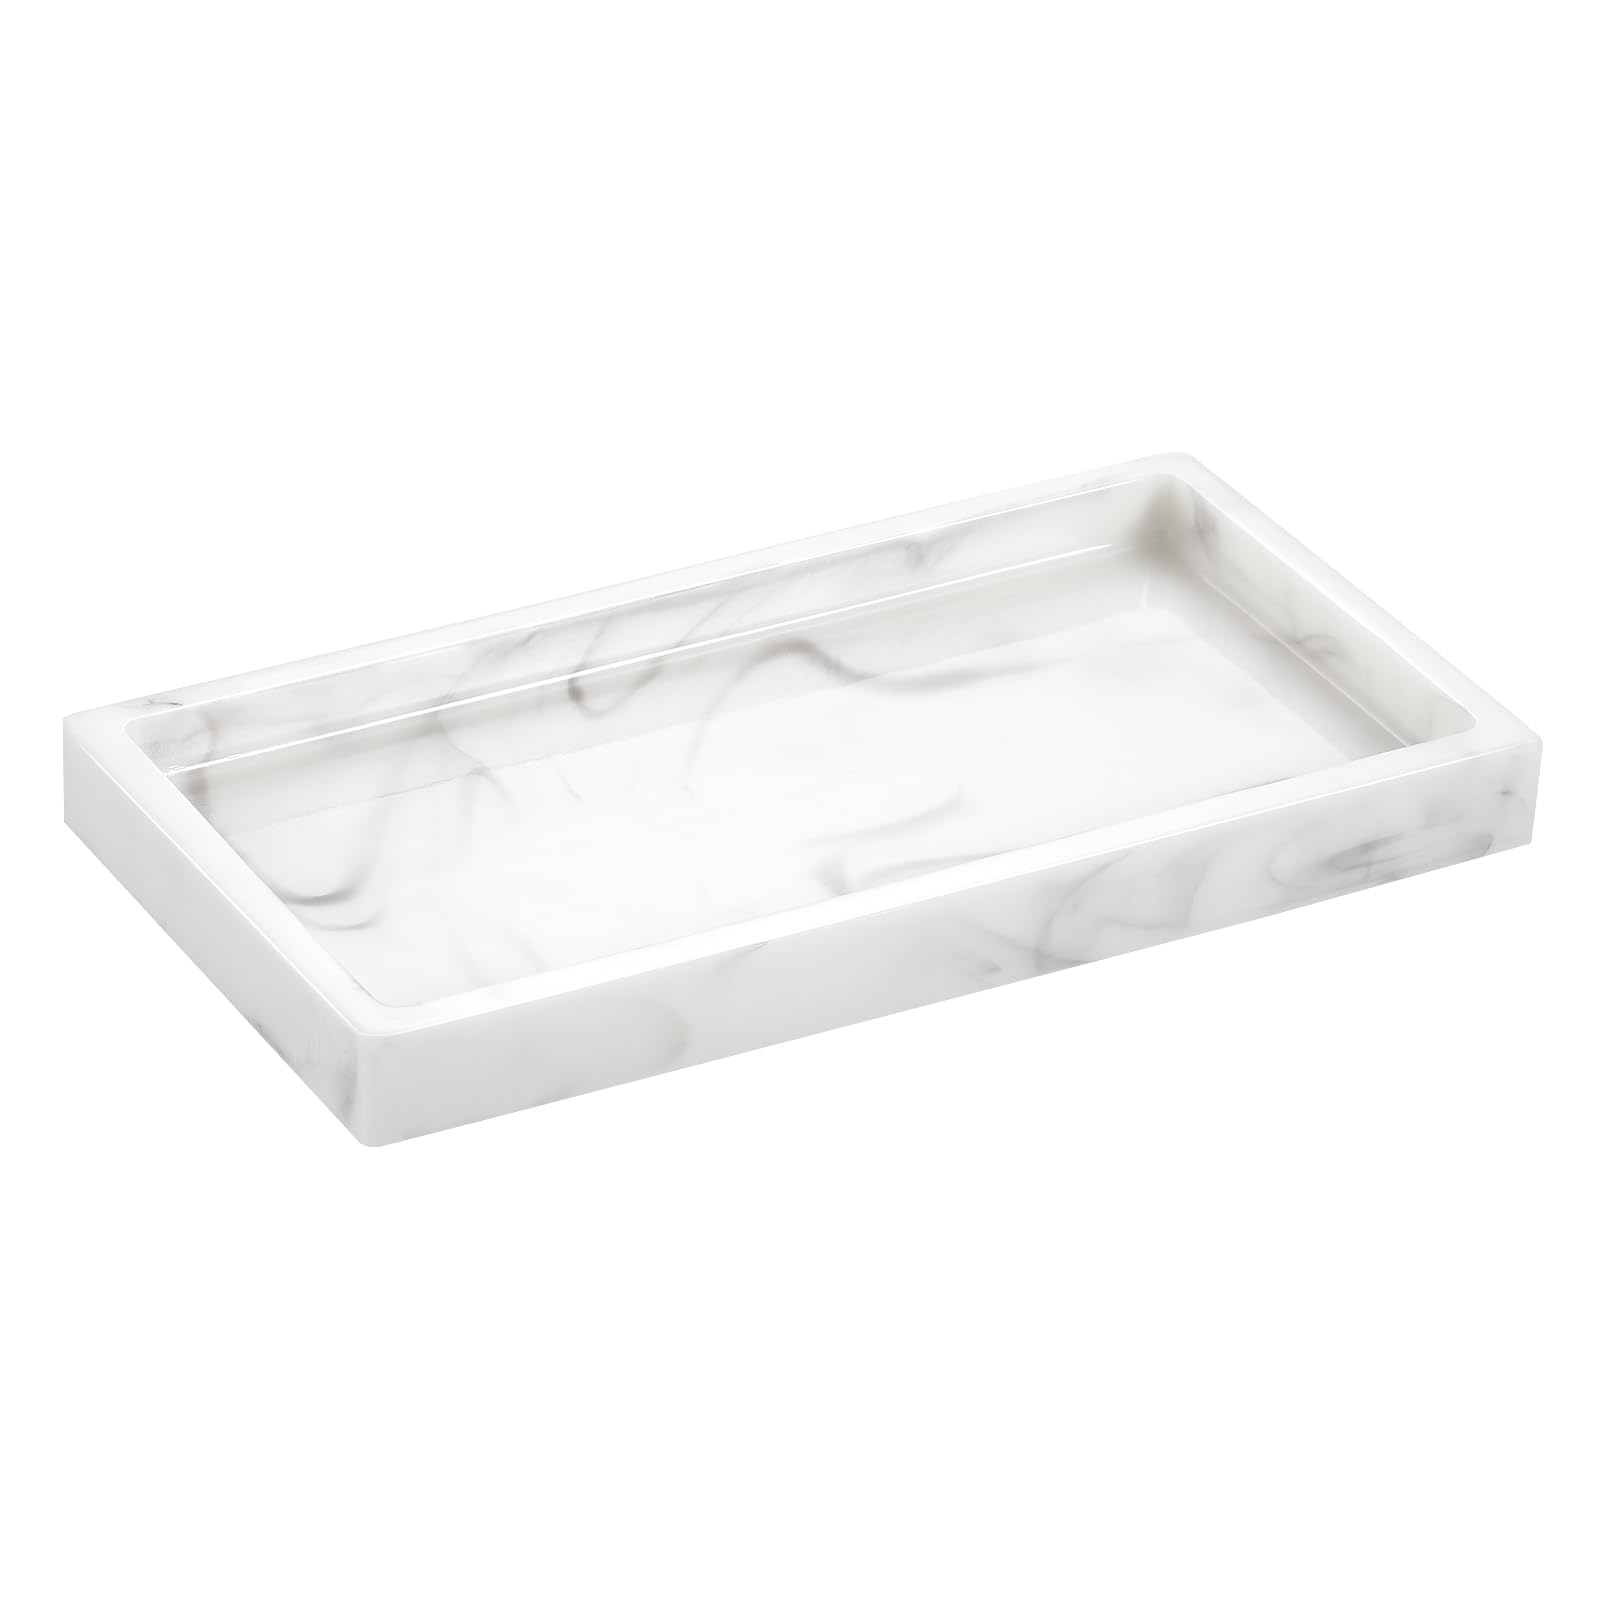 emibele resin vanity tray, mini bathroom countertop tray kitchen tray dresser tray jewelry ring dish holder cosmetic tray for